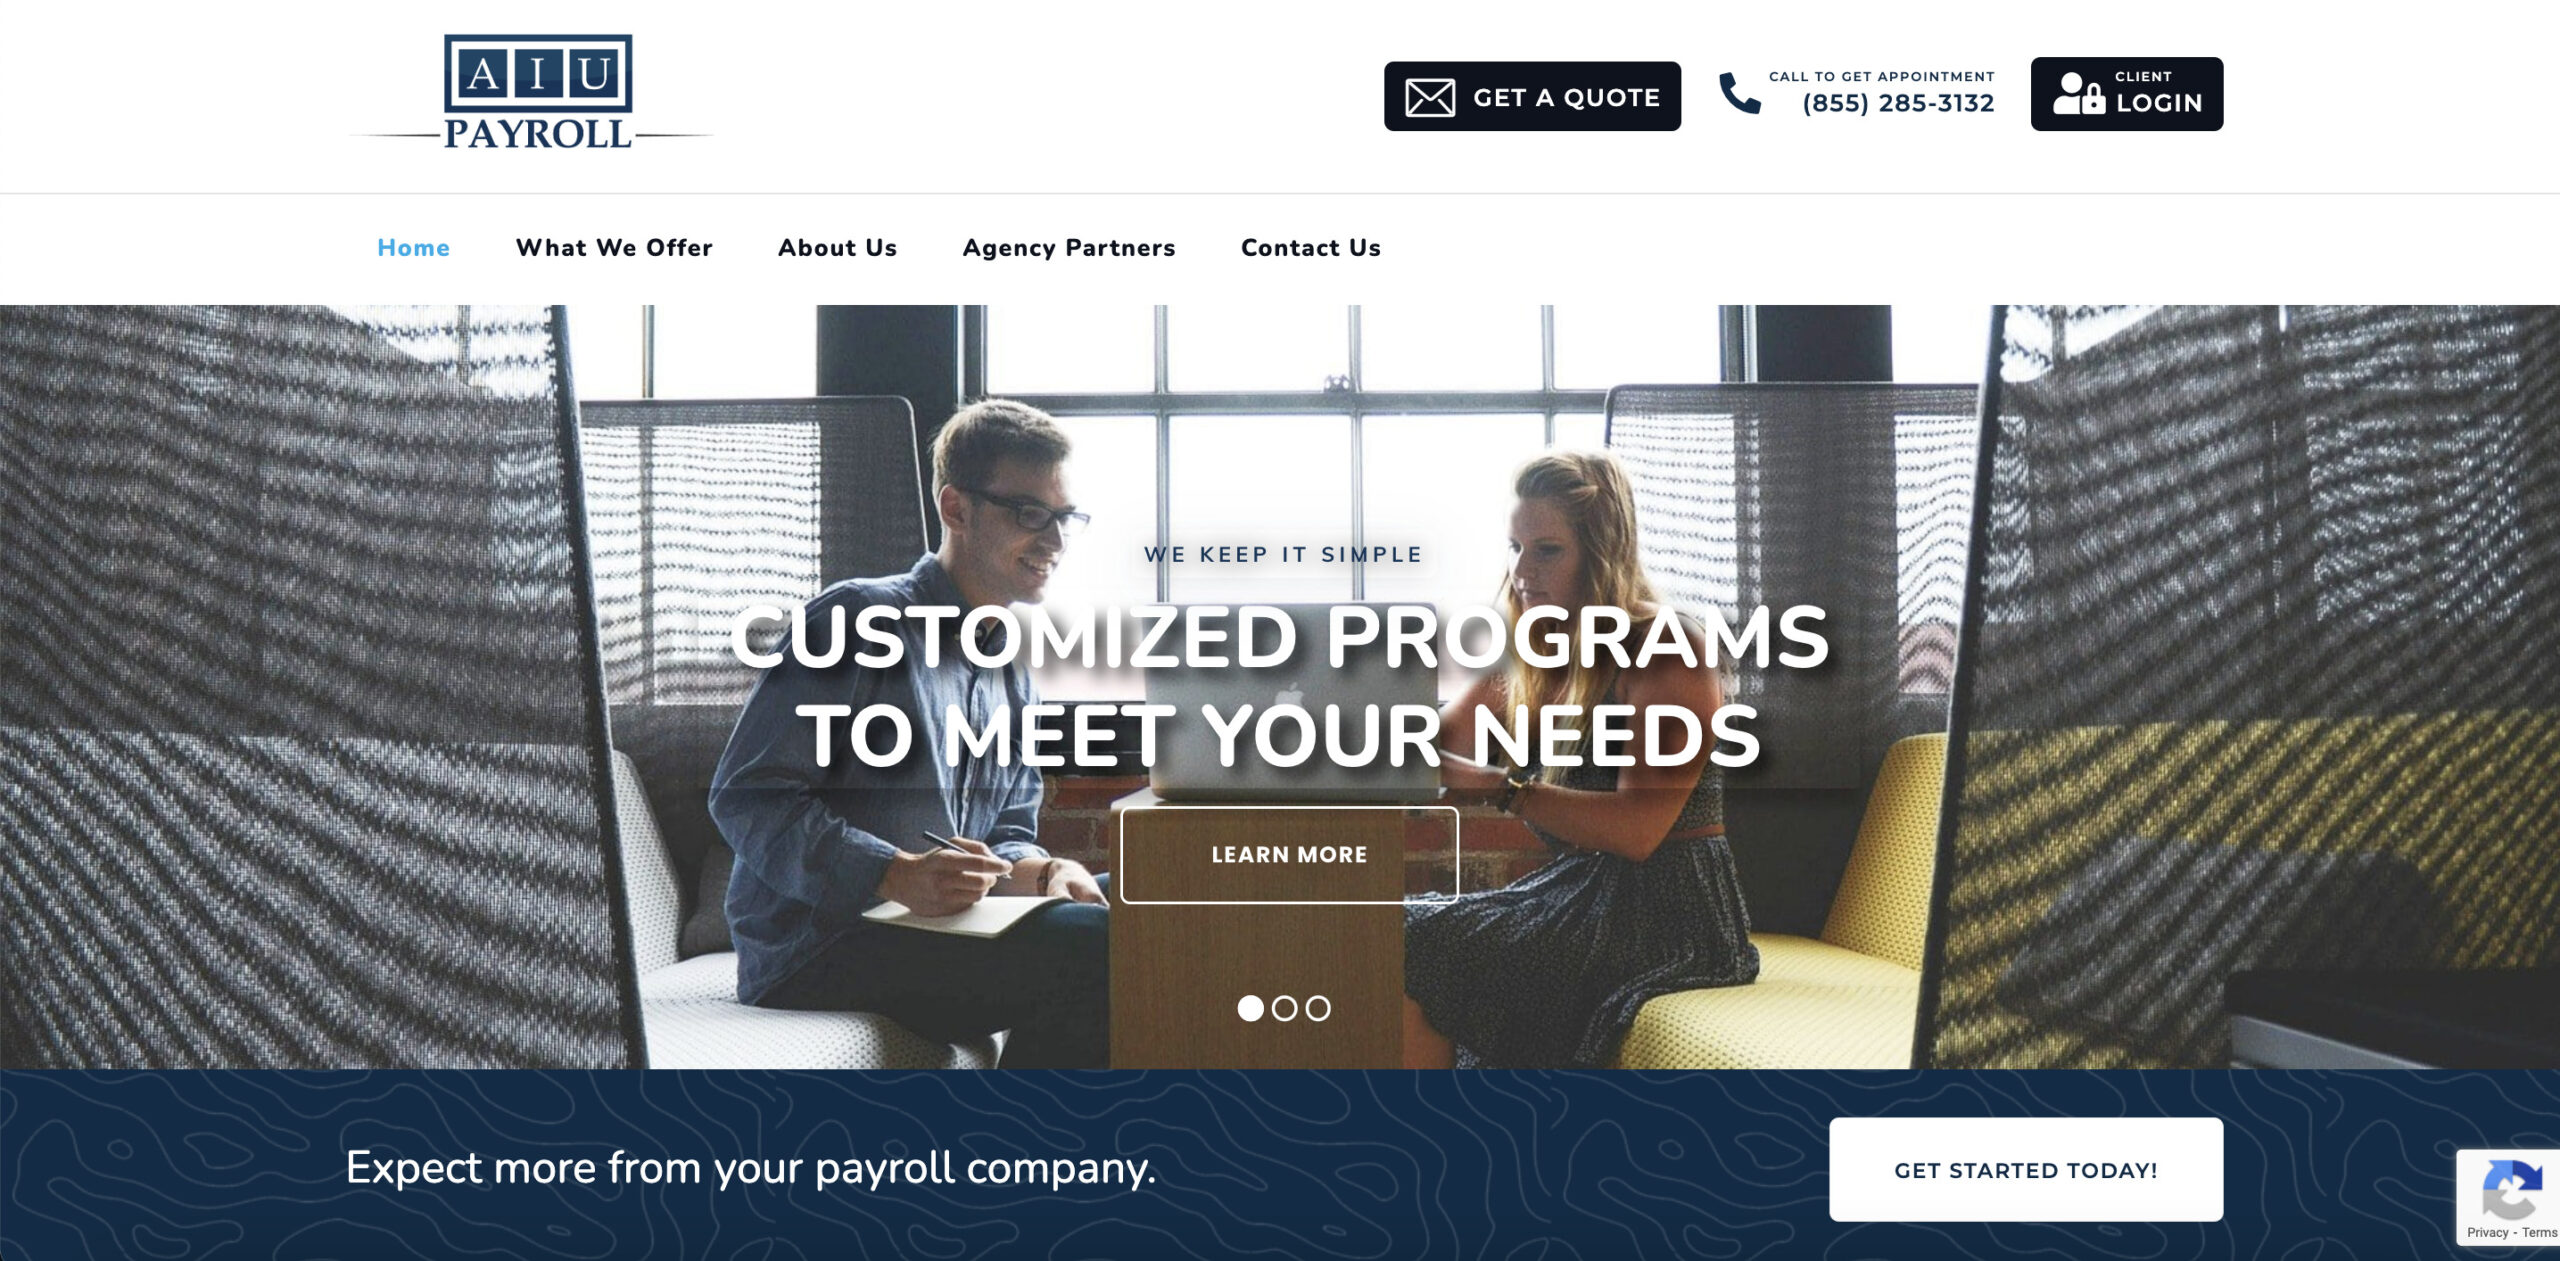 AIU Payroll - Tampa Web Design Client